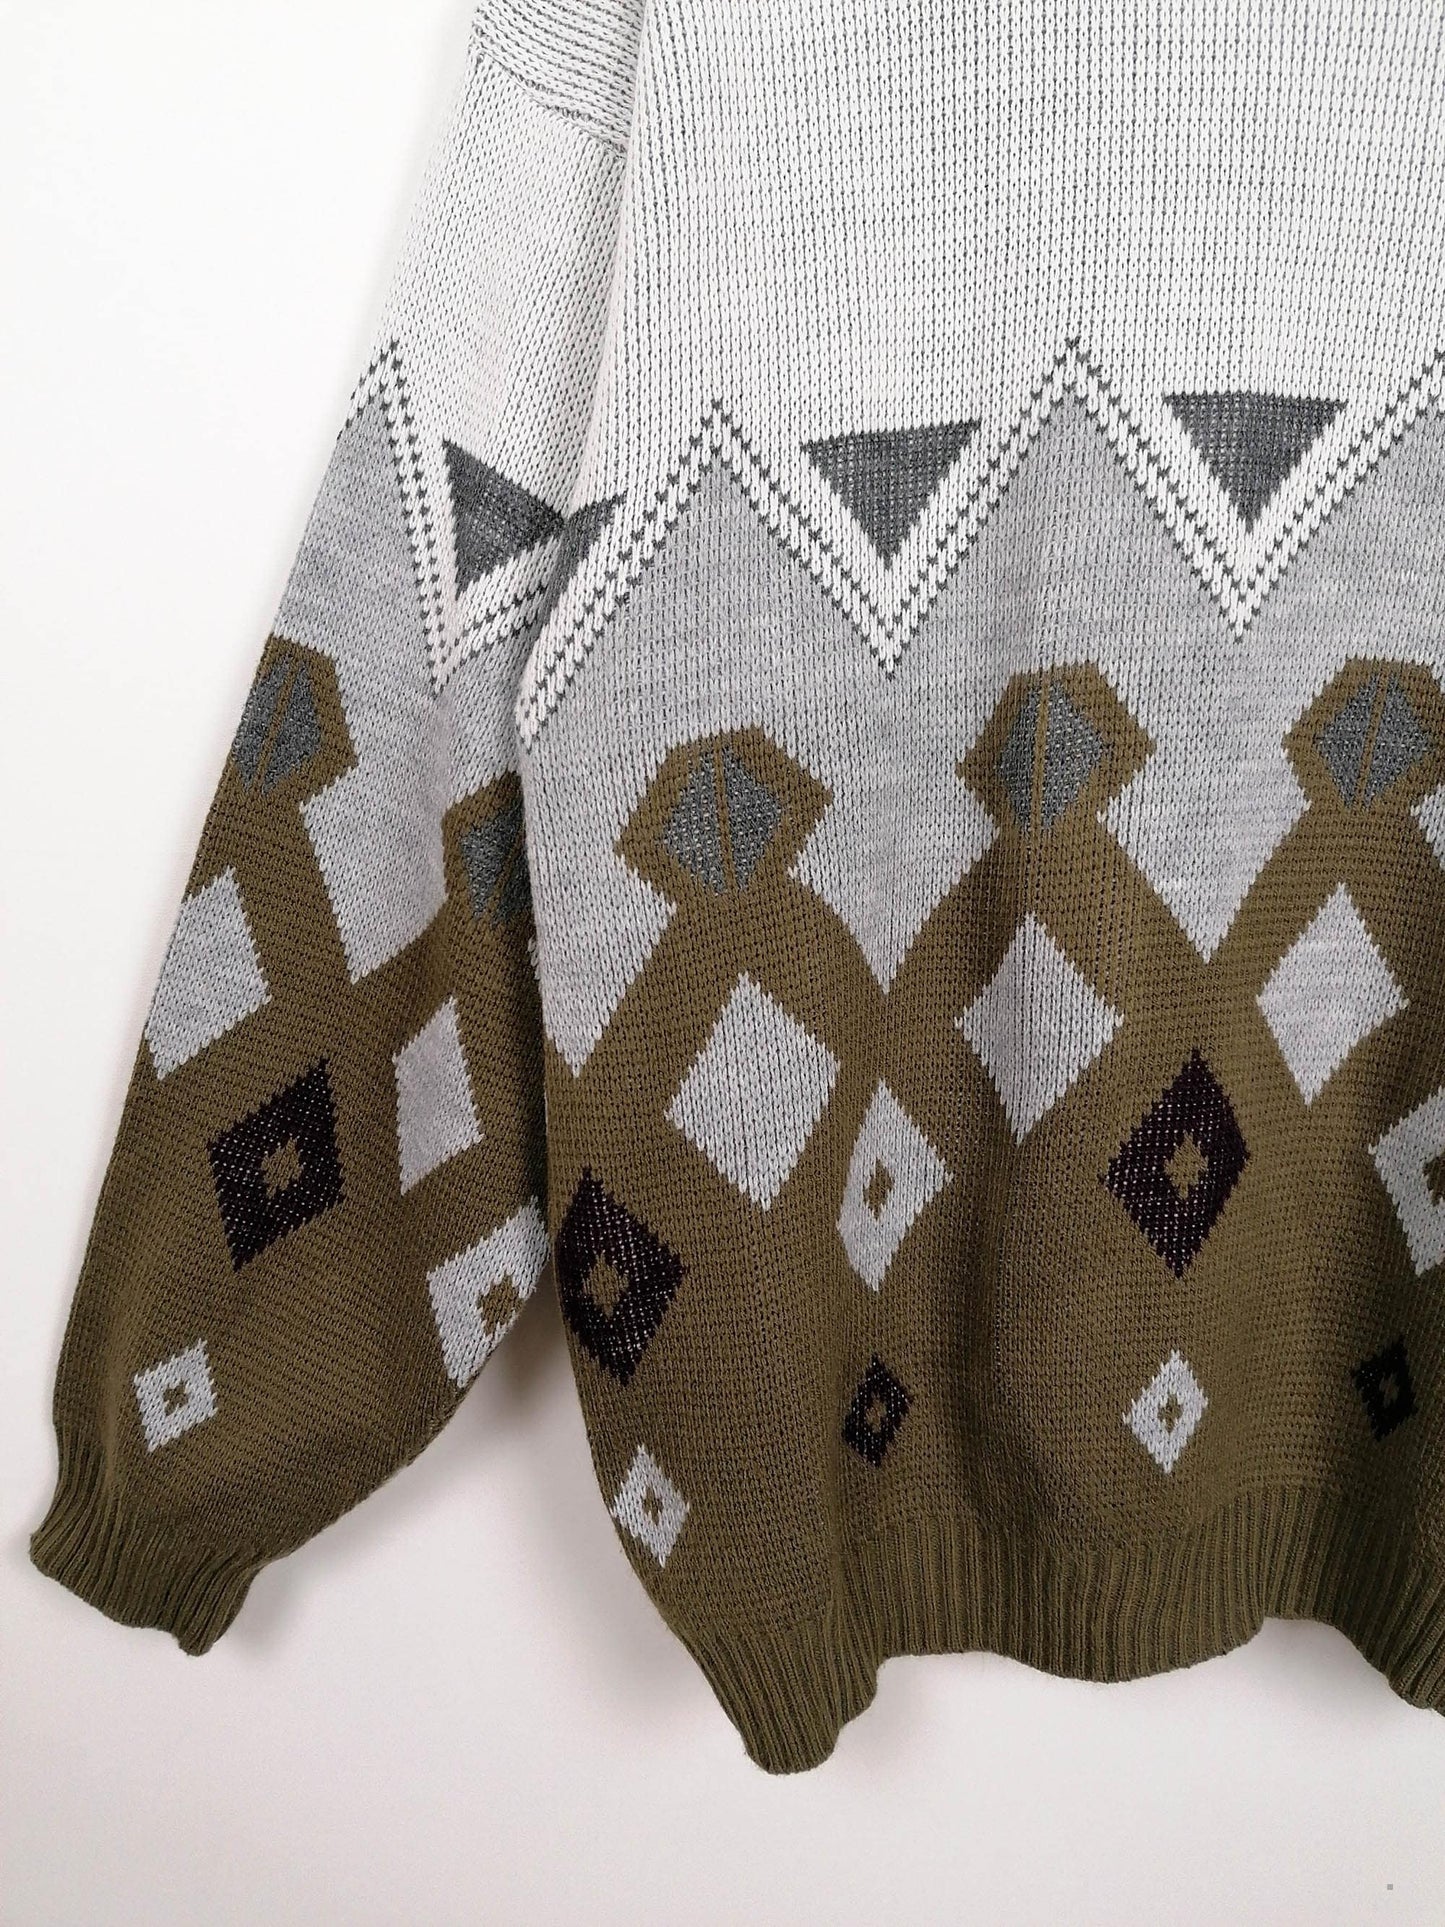 ENRICO CORLANI Unisex Retro Dad Sweater - size L-XL